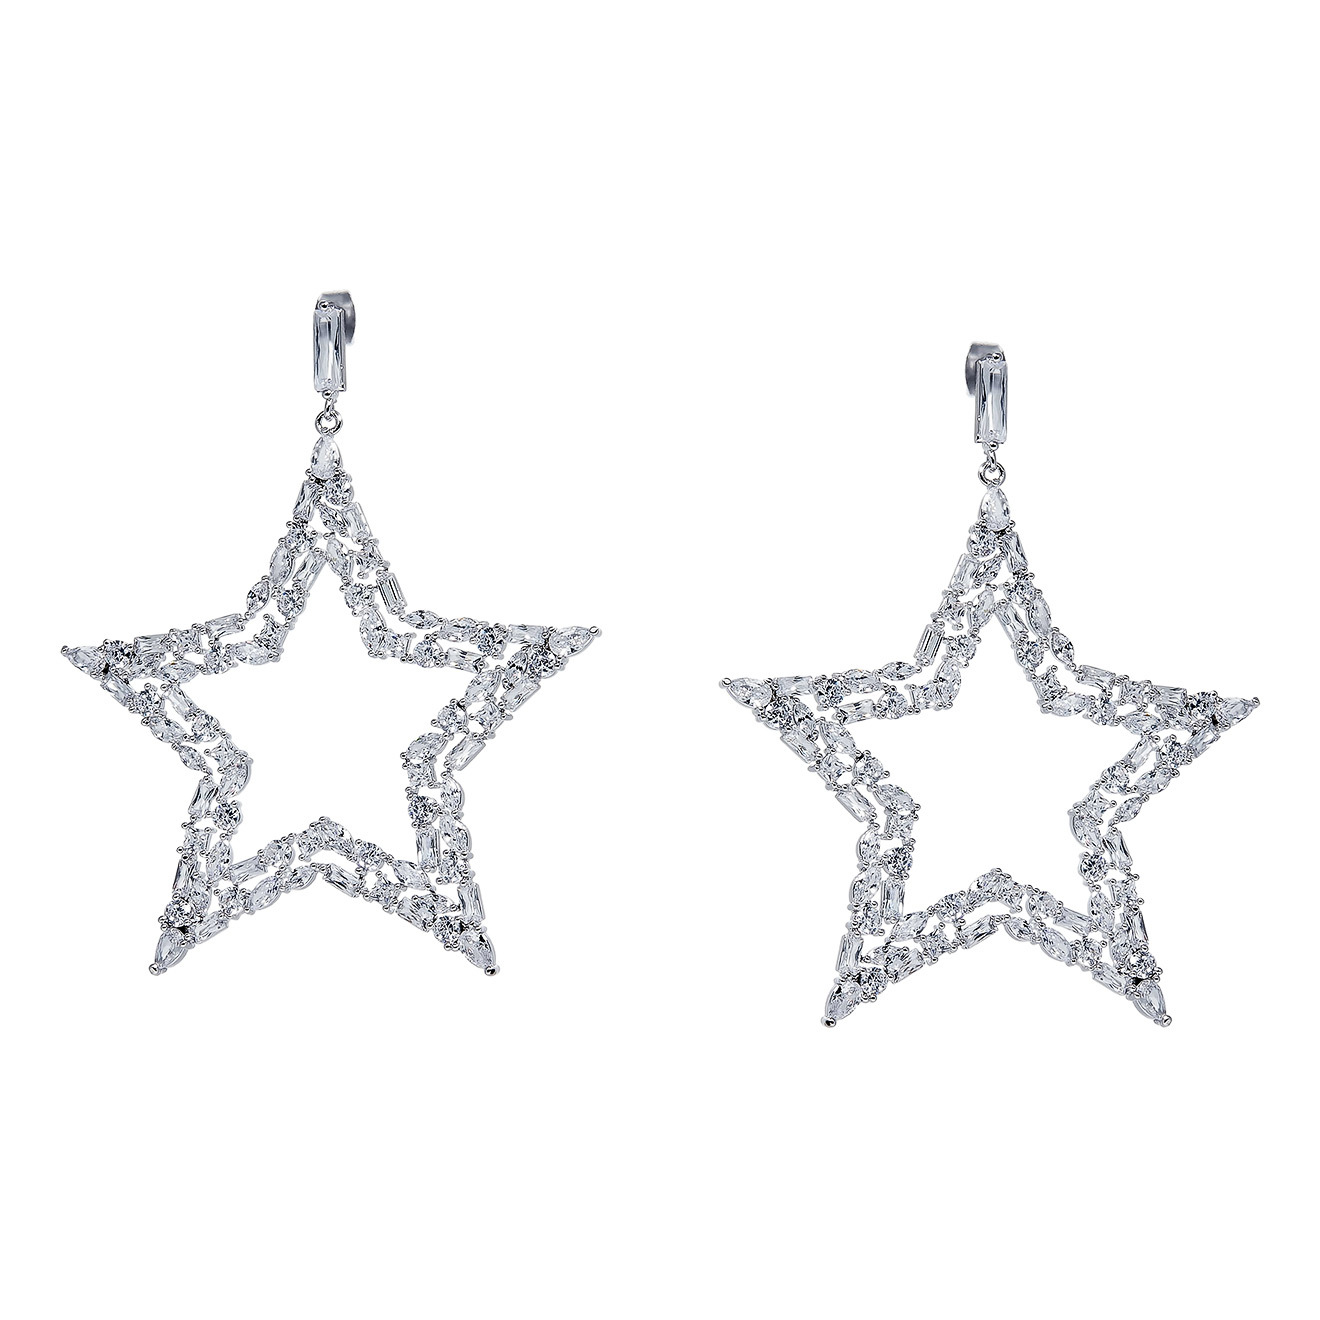 Herald Percy Серебристые серьги-звезды с кристаллами herald percy серебристые длинные серьги дорожки с кристаллами